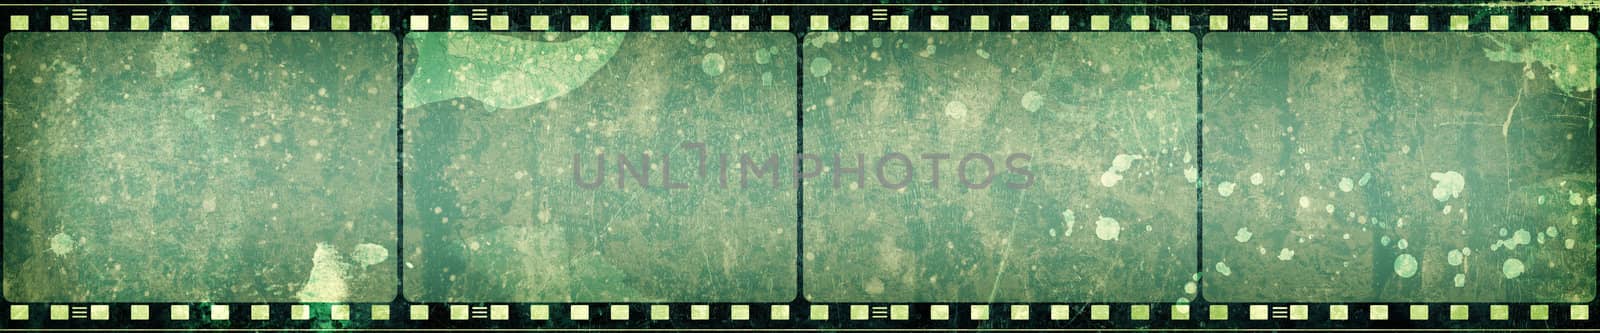 Grunge film frame by Lizard